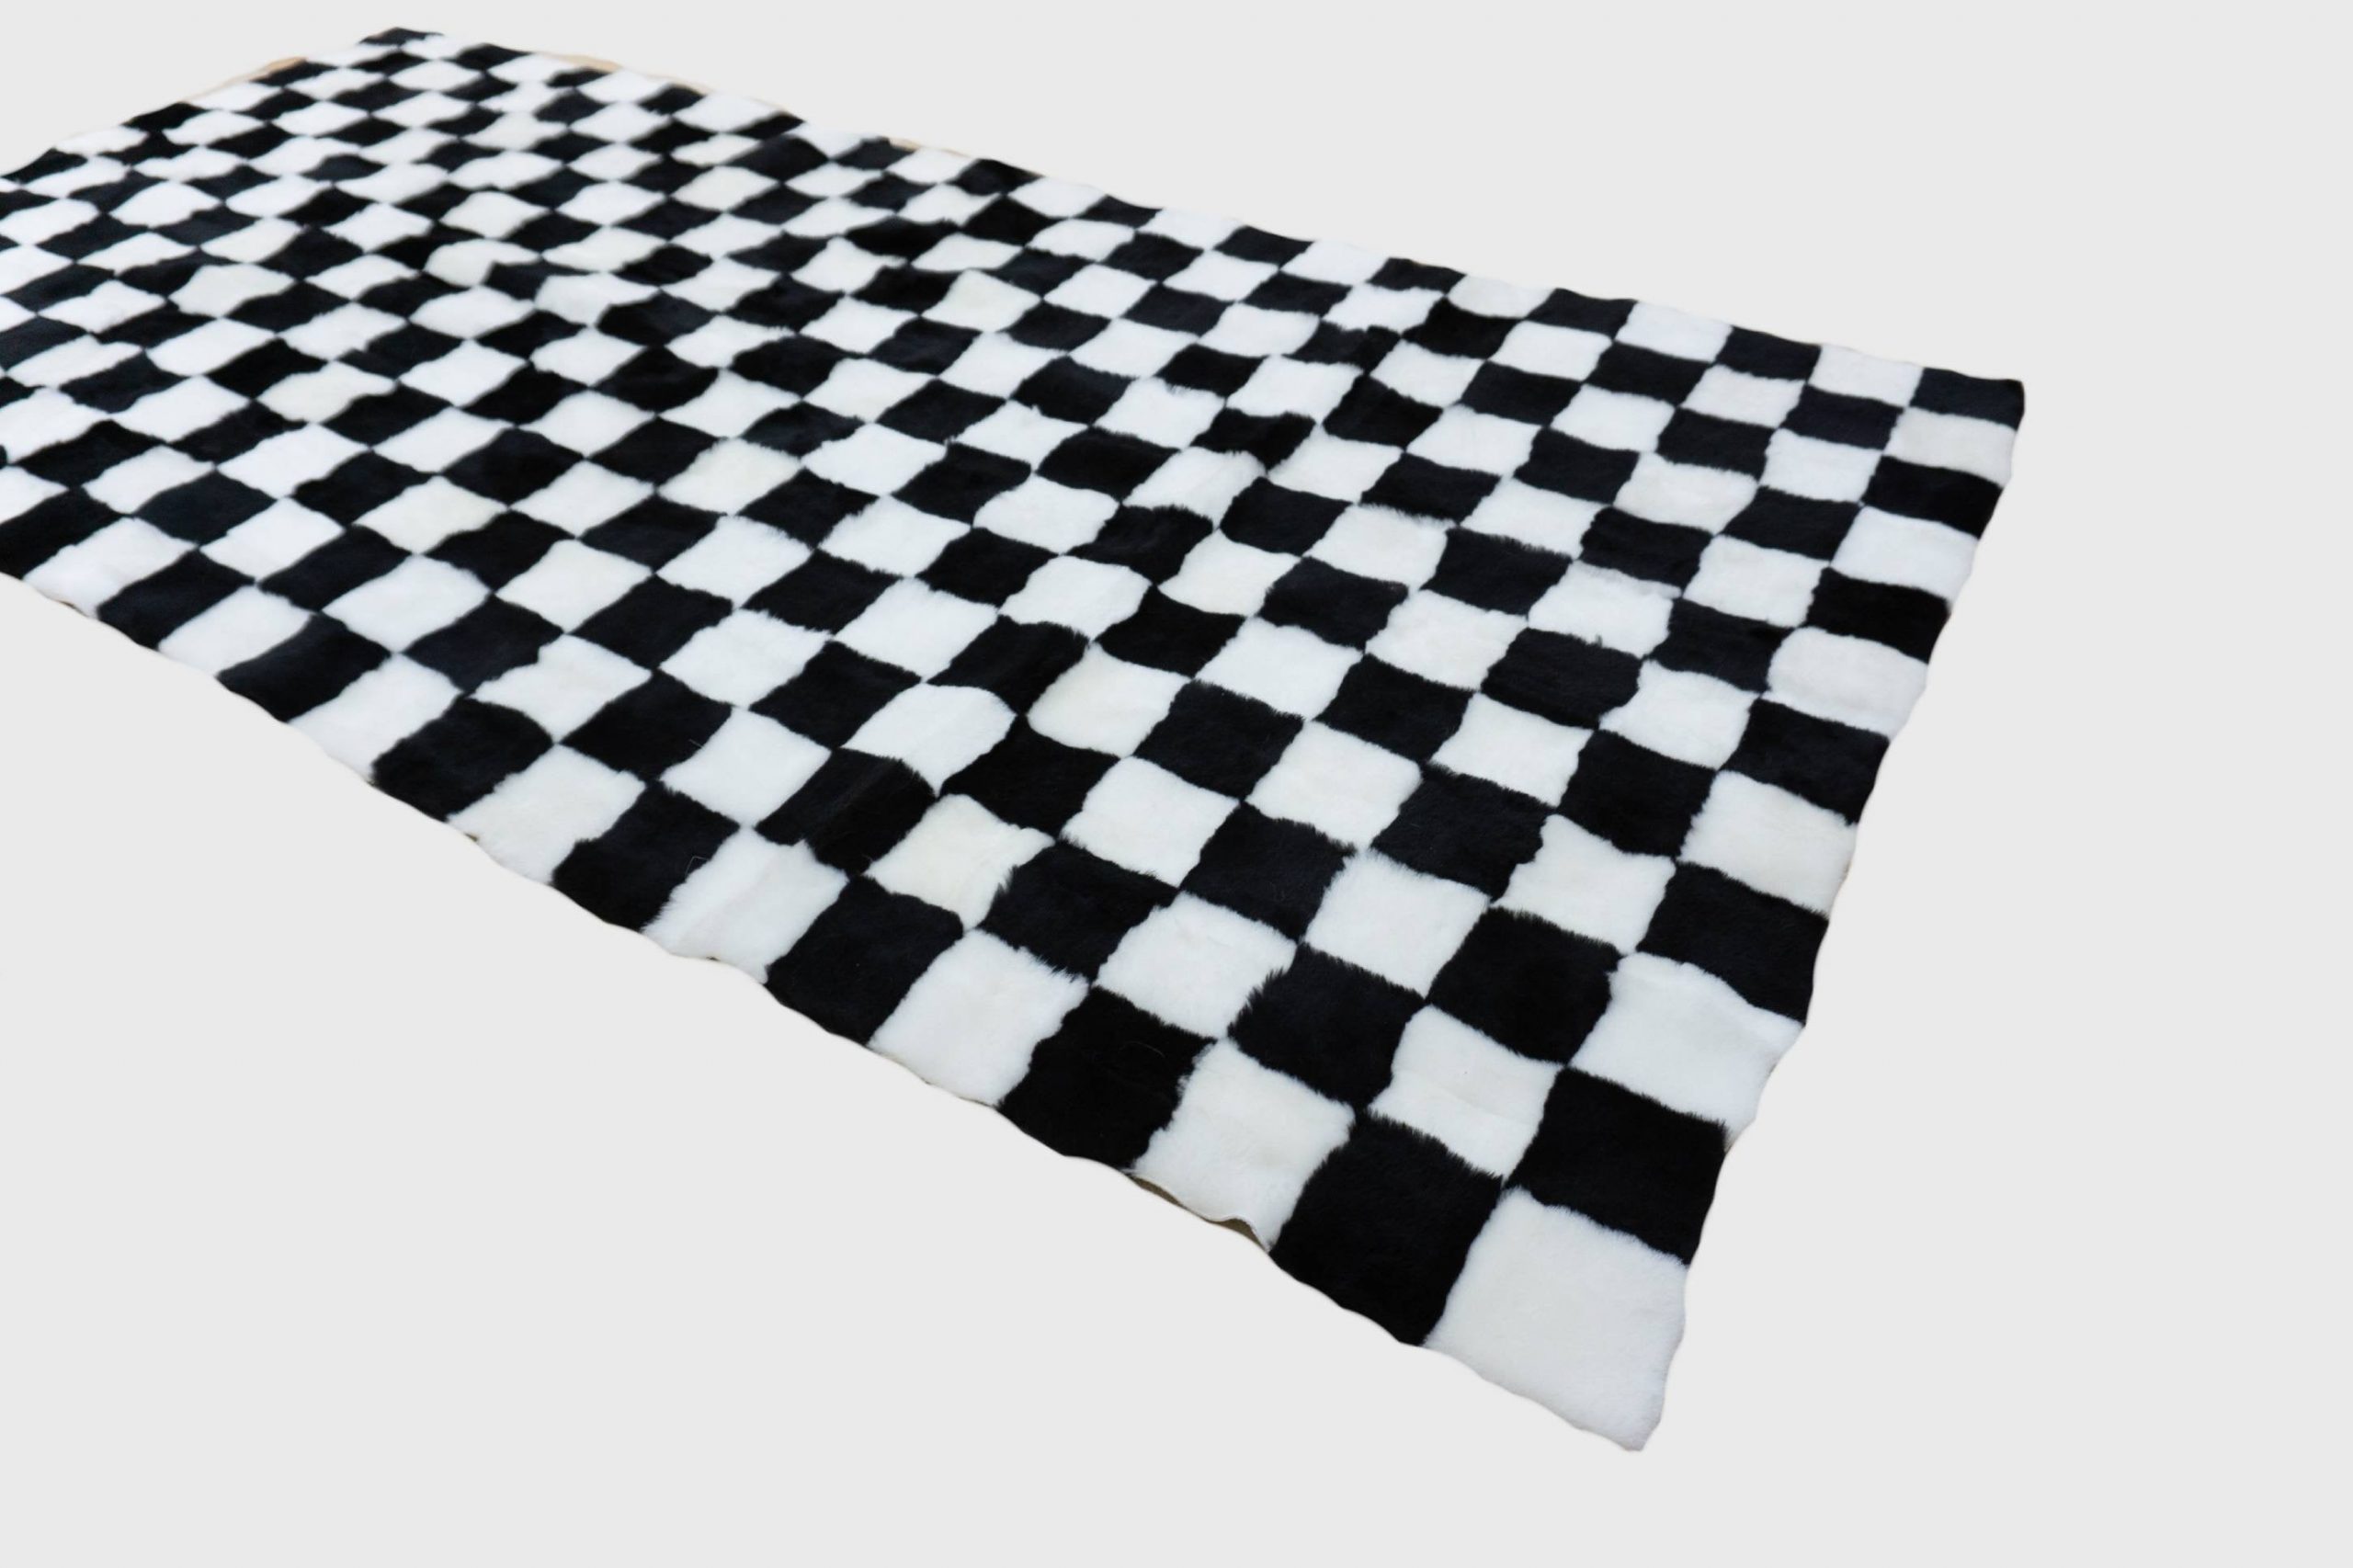 Black and white sheepskin carpet